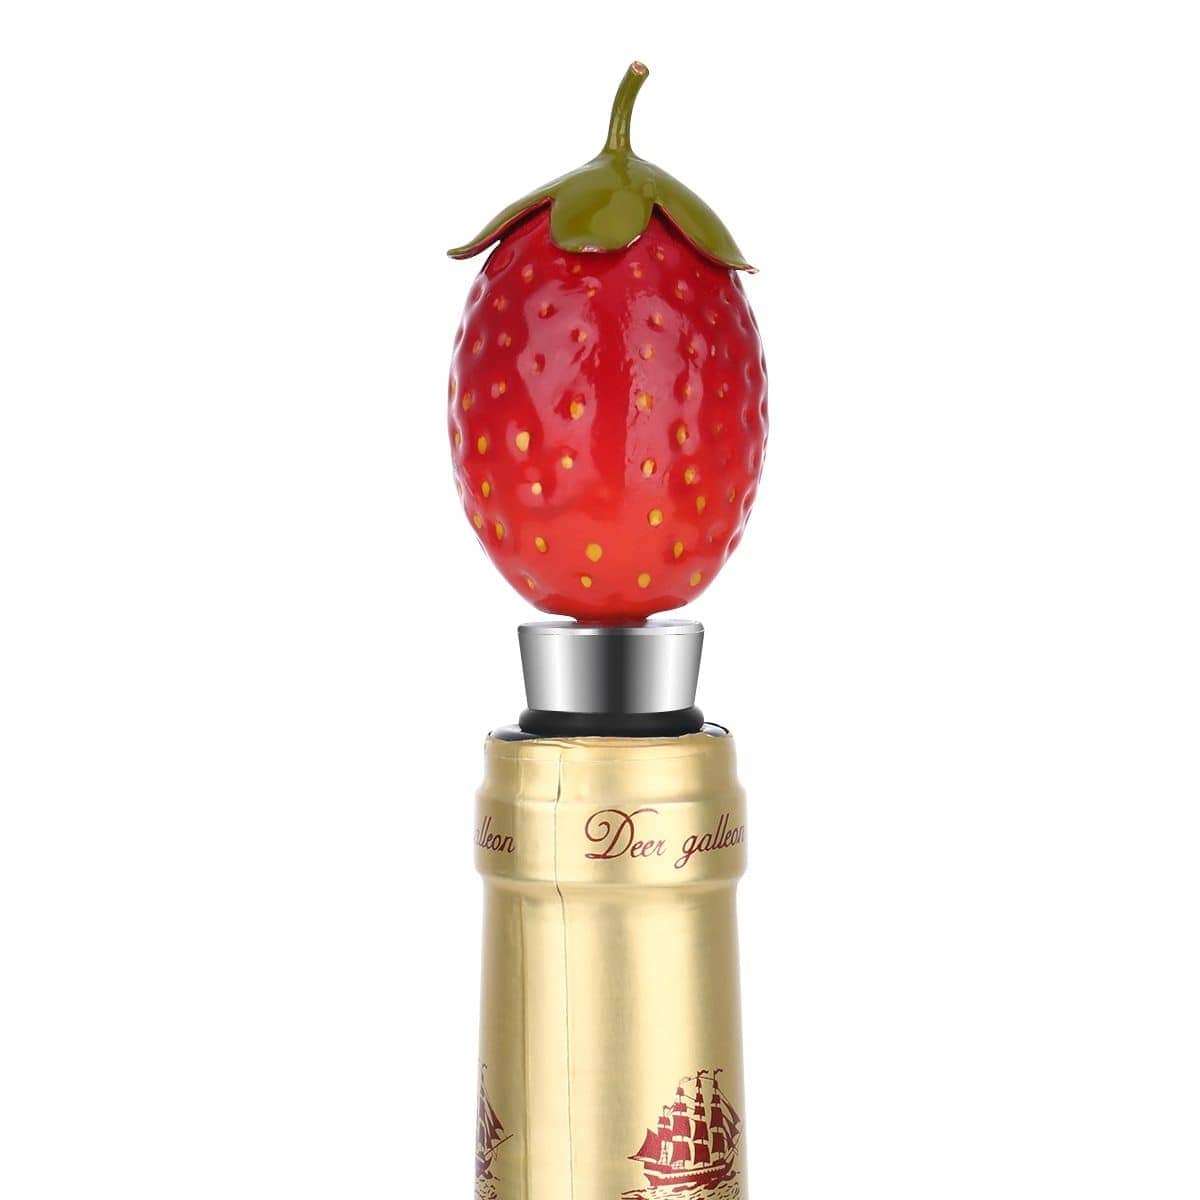 Strawberry Wine Bottle Cork Stopper: Fun and Stylish Wine Accessory